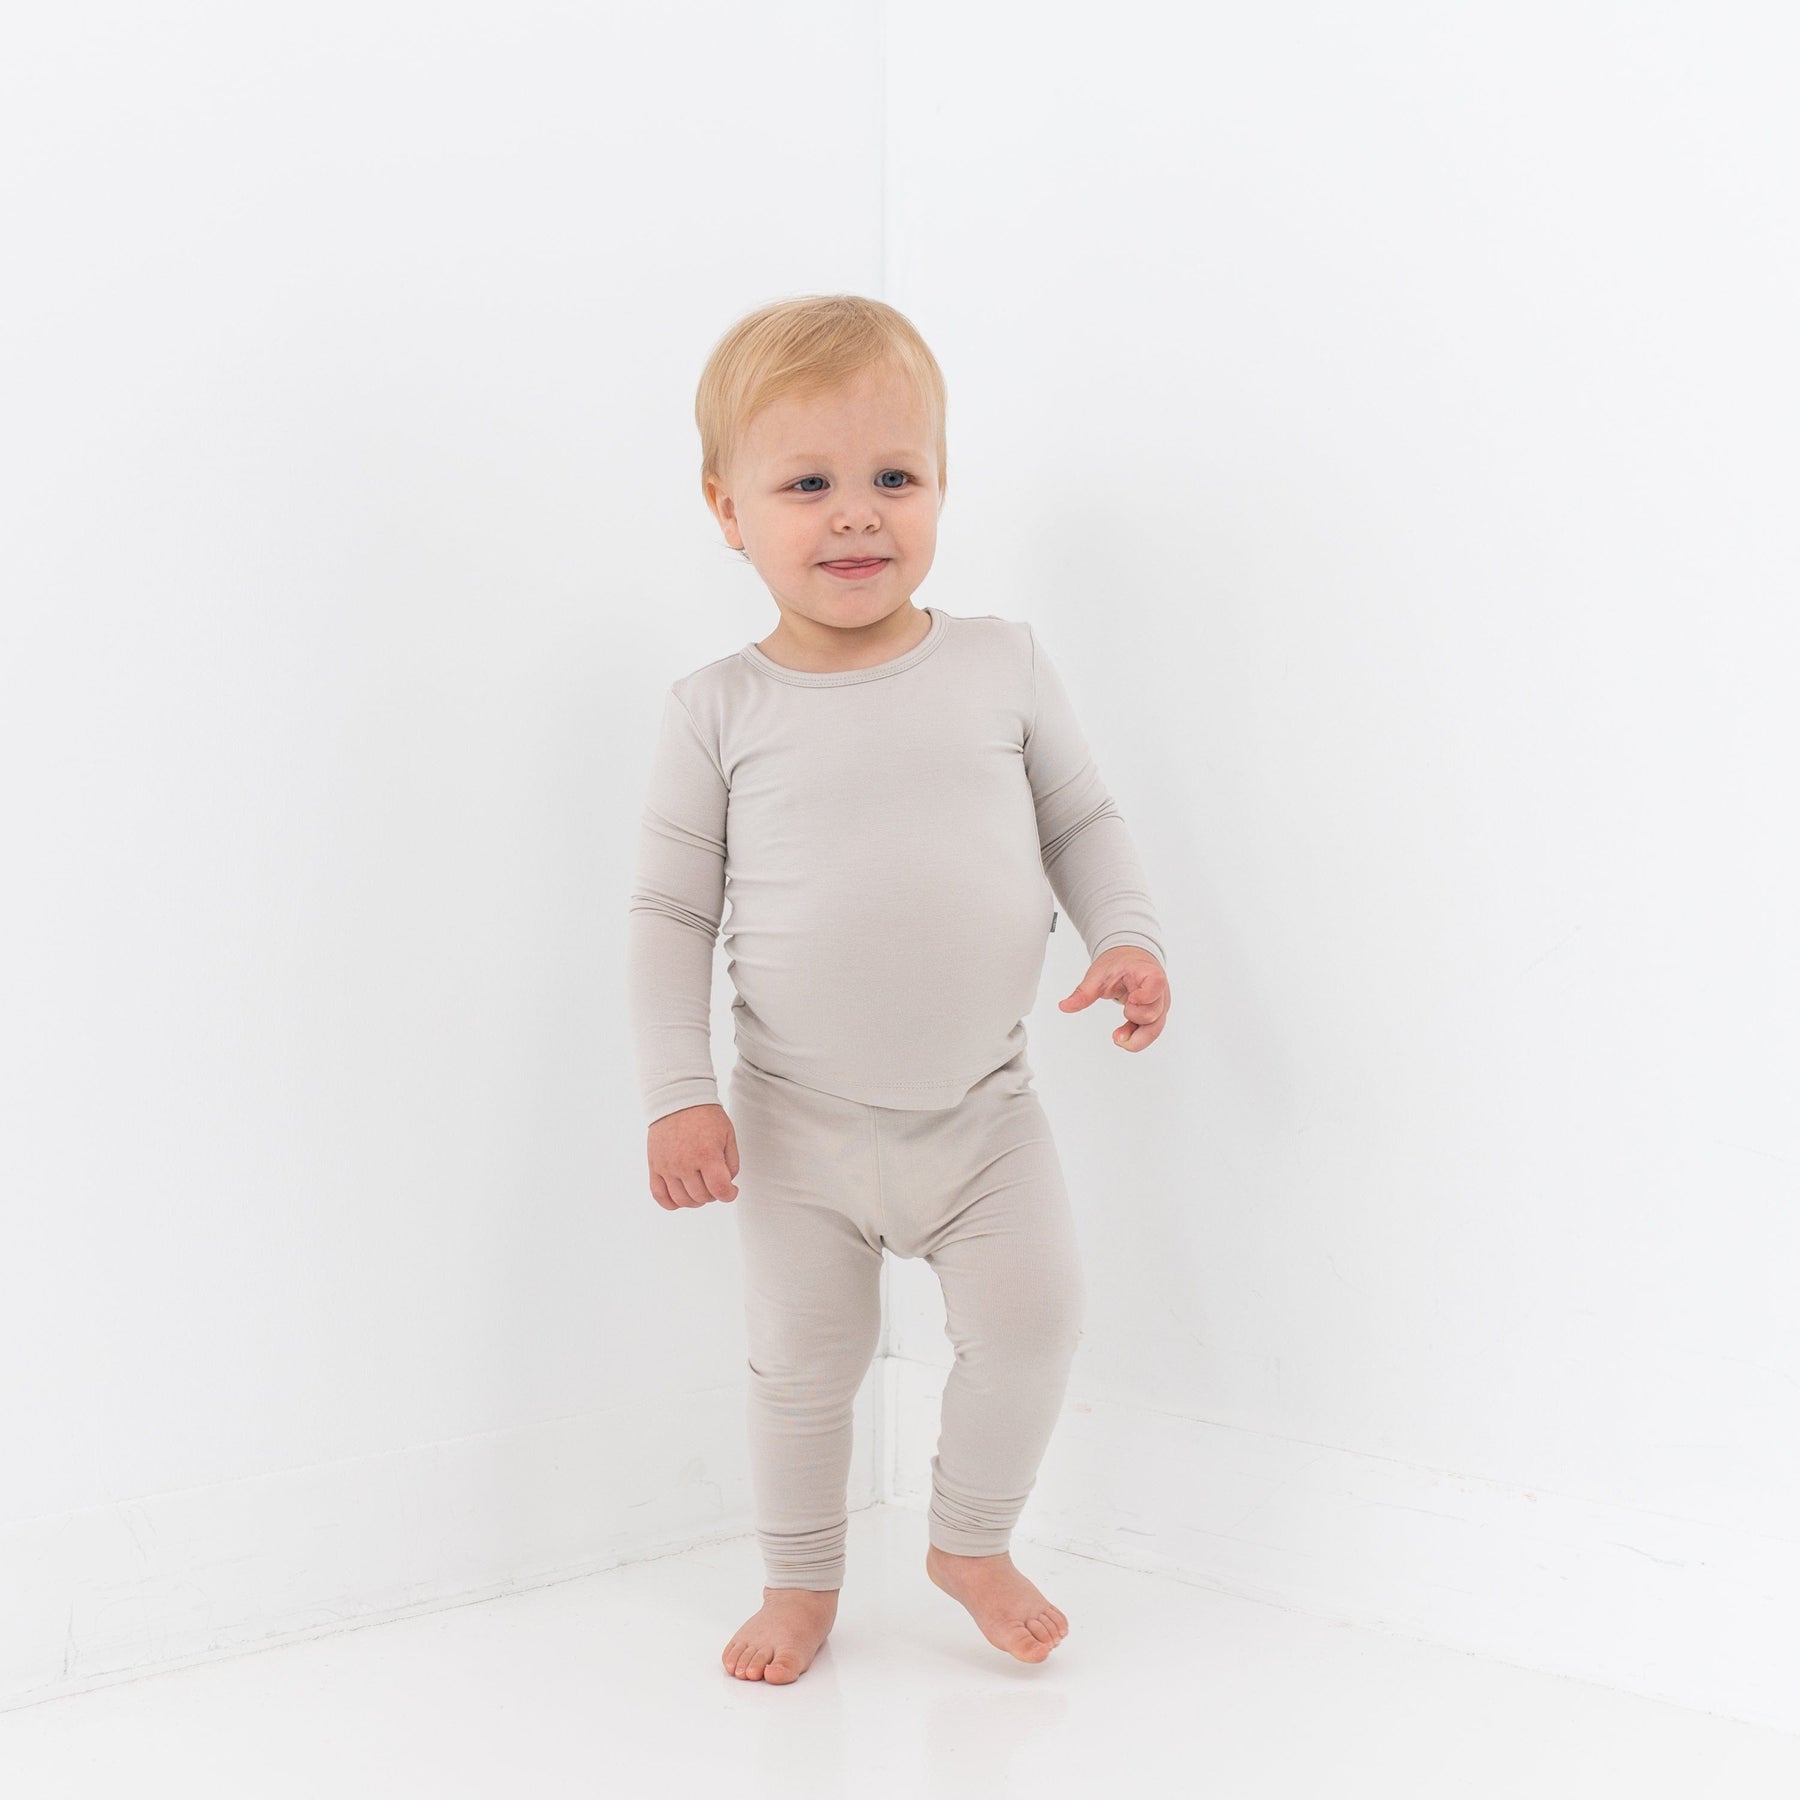 Toddler wearing Kyte Baby Long Sleeve Pajamas in Oat